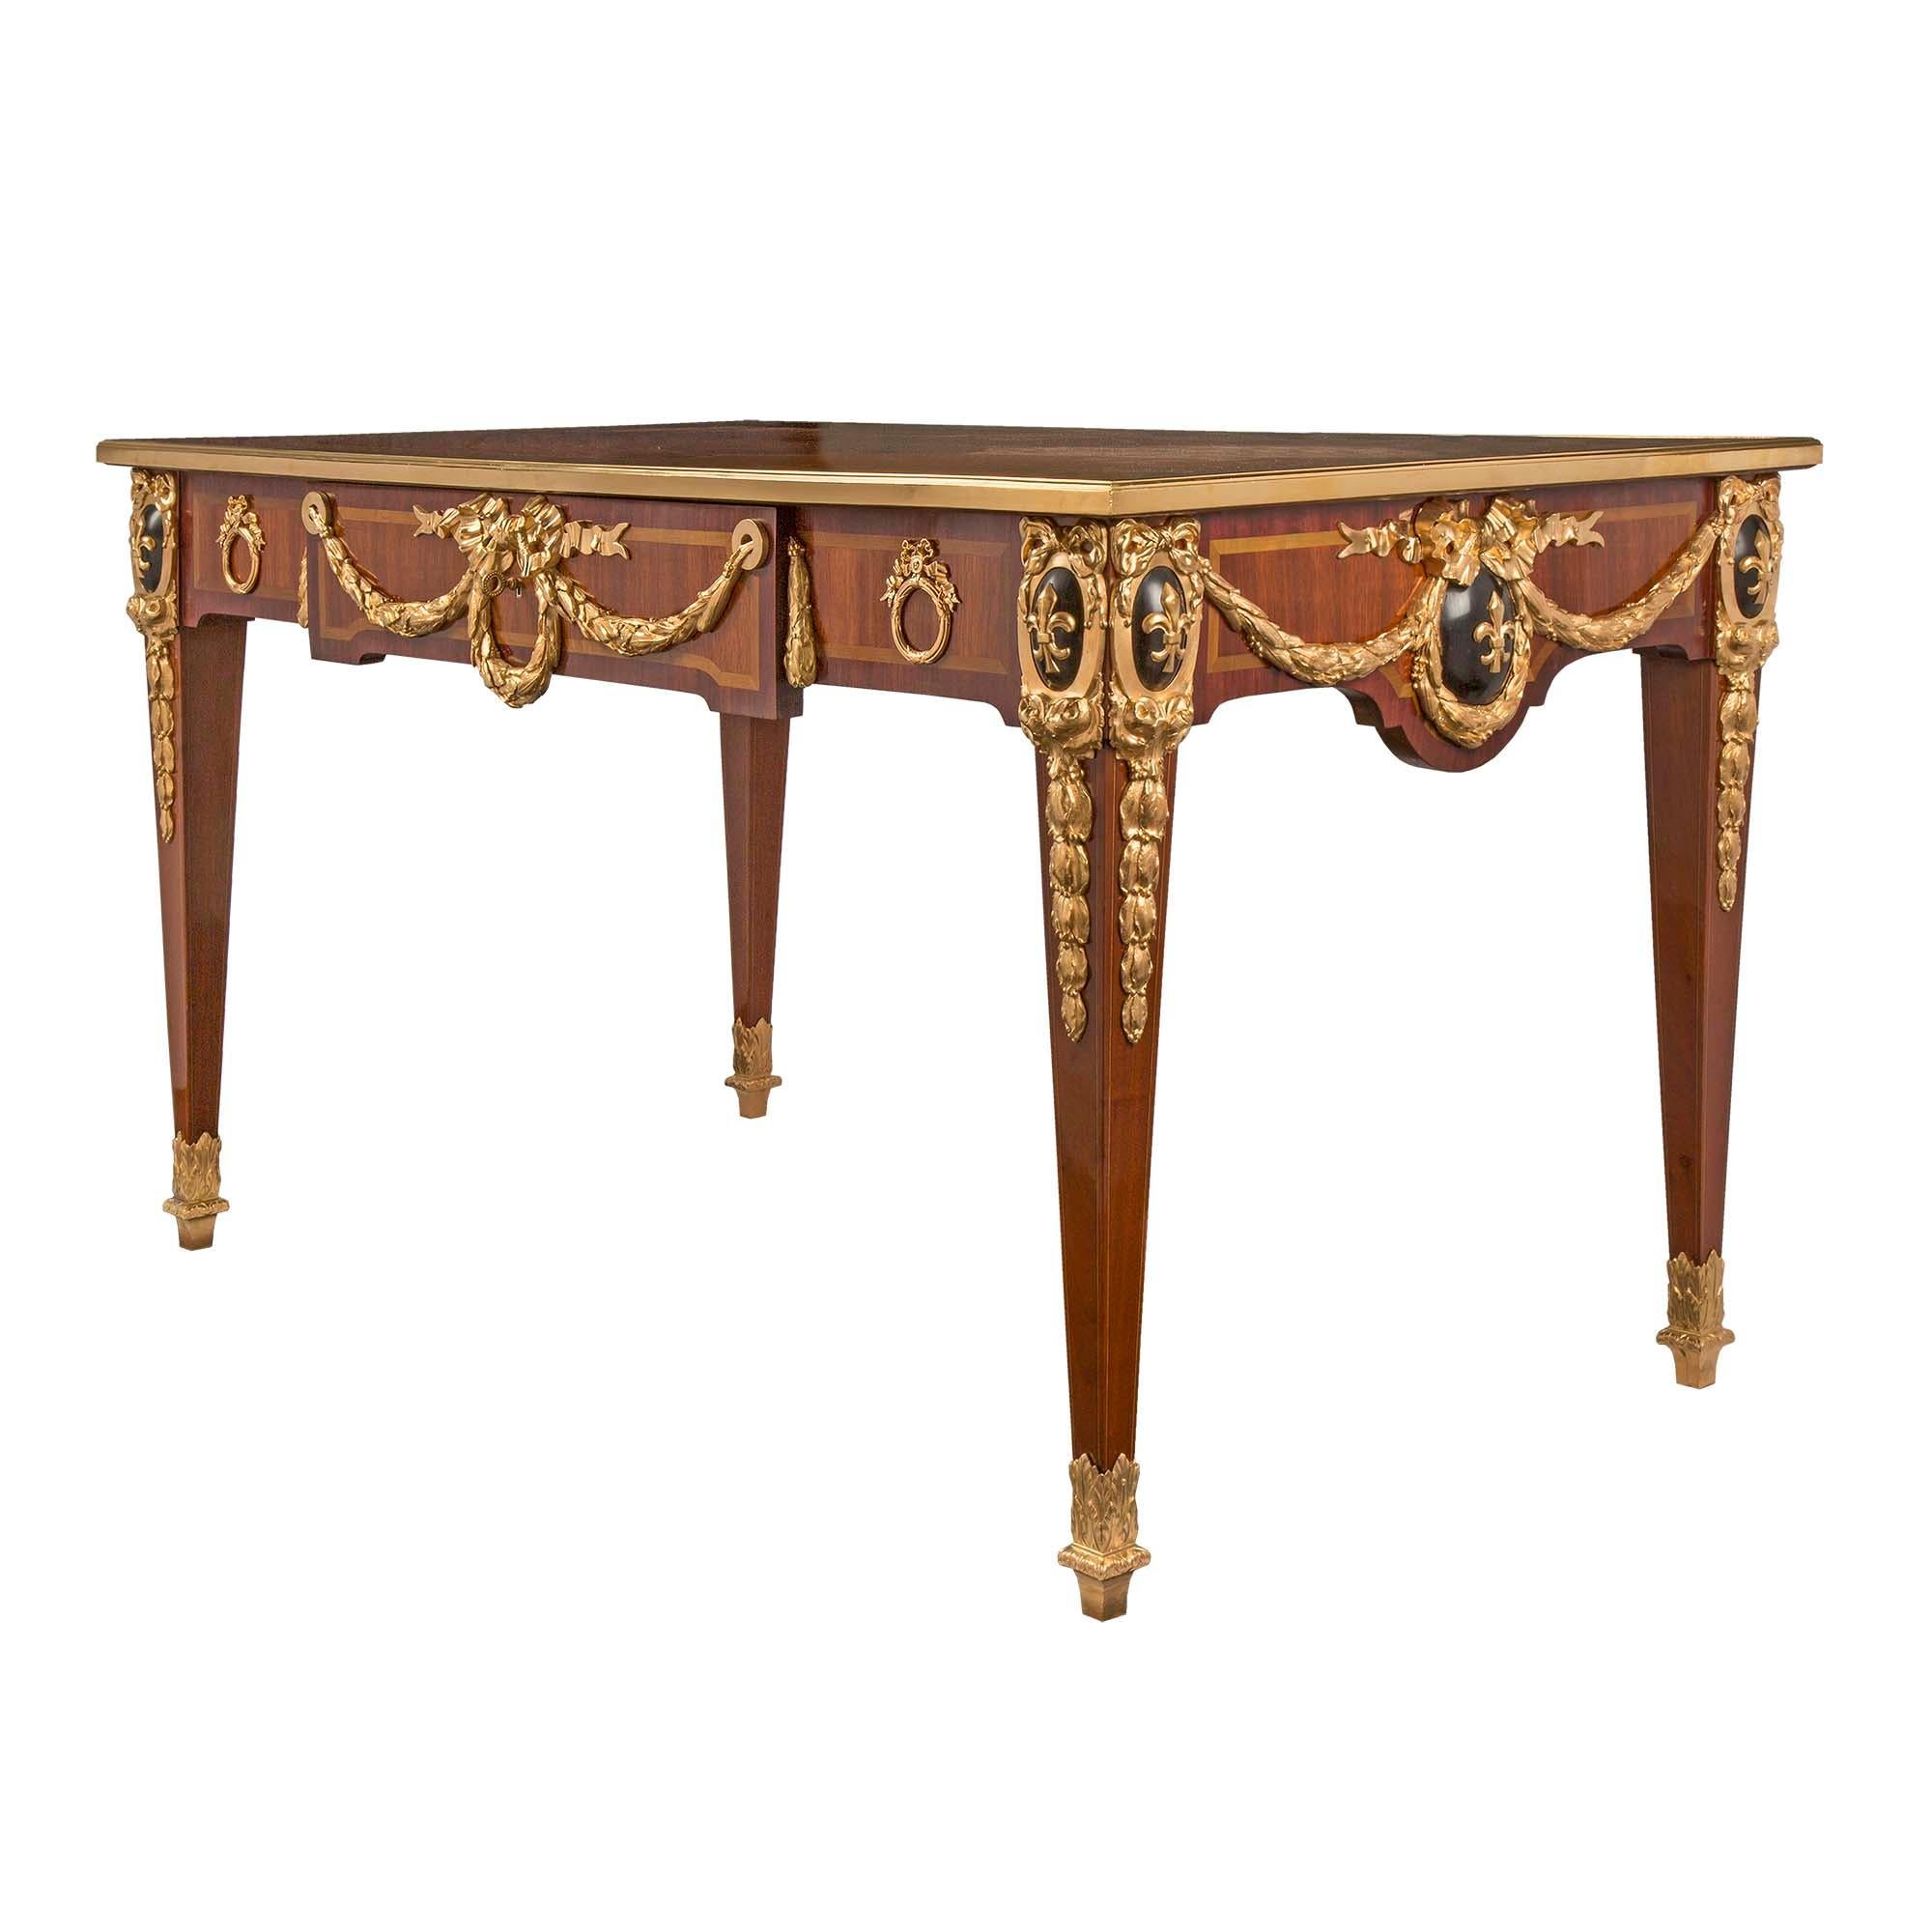 French 19th Century Louis XVI Style Mahogany and Ormolu Inlaid Bureau Plat For Sale 1